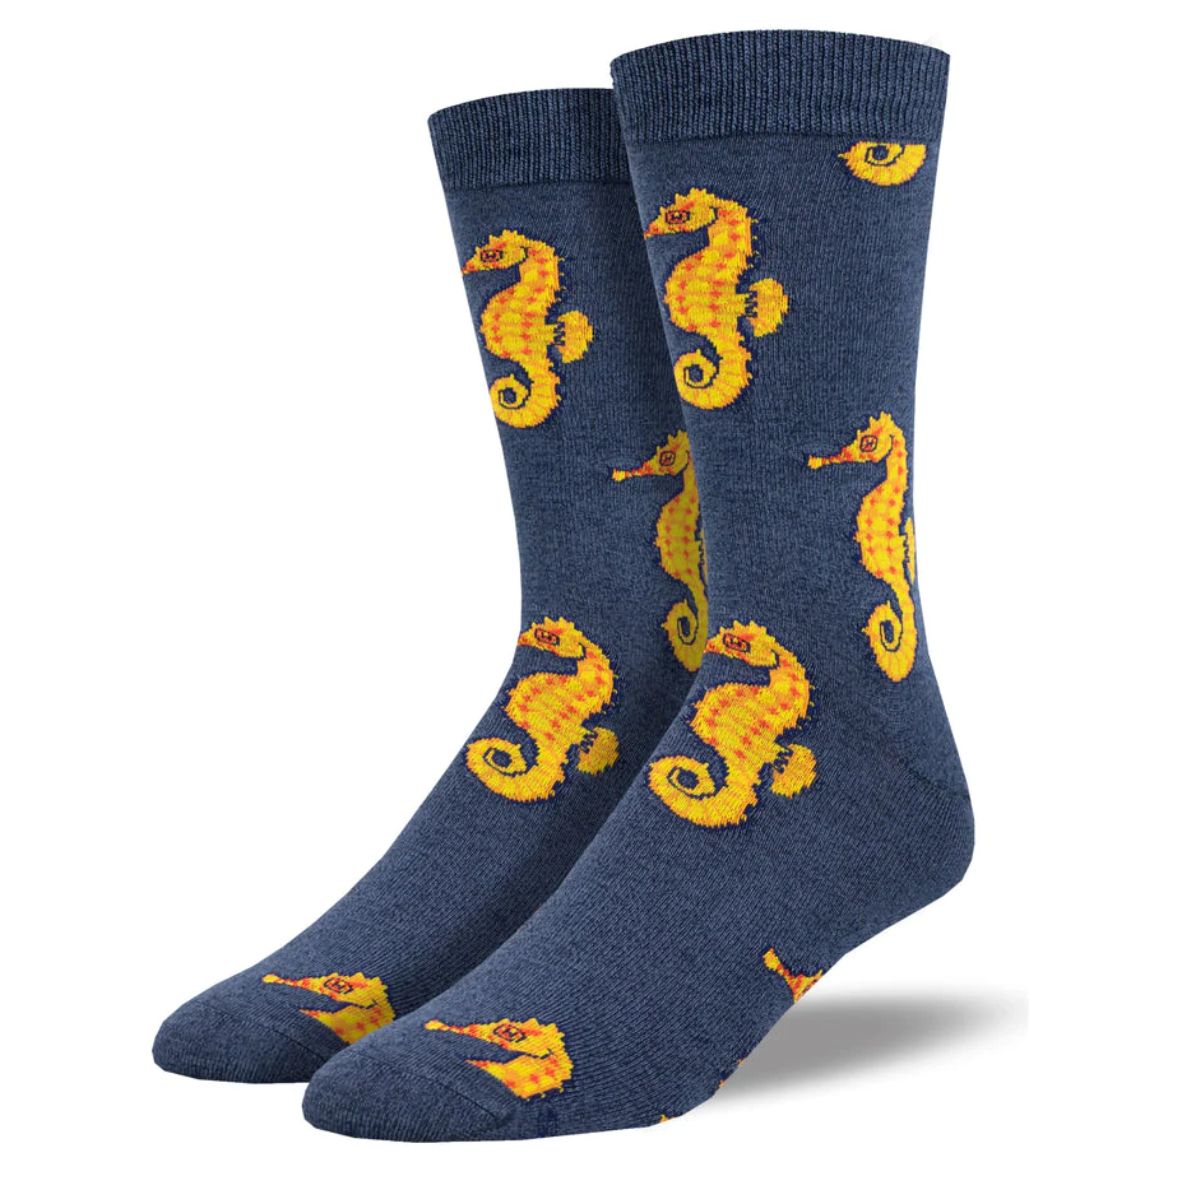 Regal seahorse socks a pair of navy blue crew socks with seahorse print